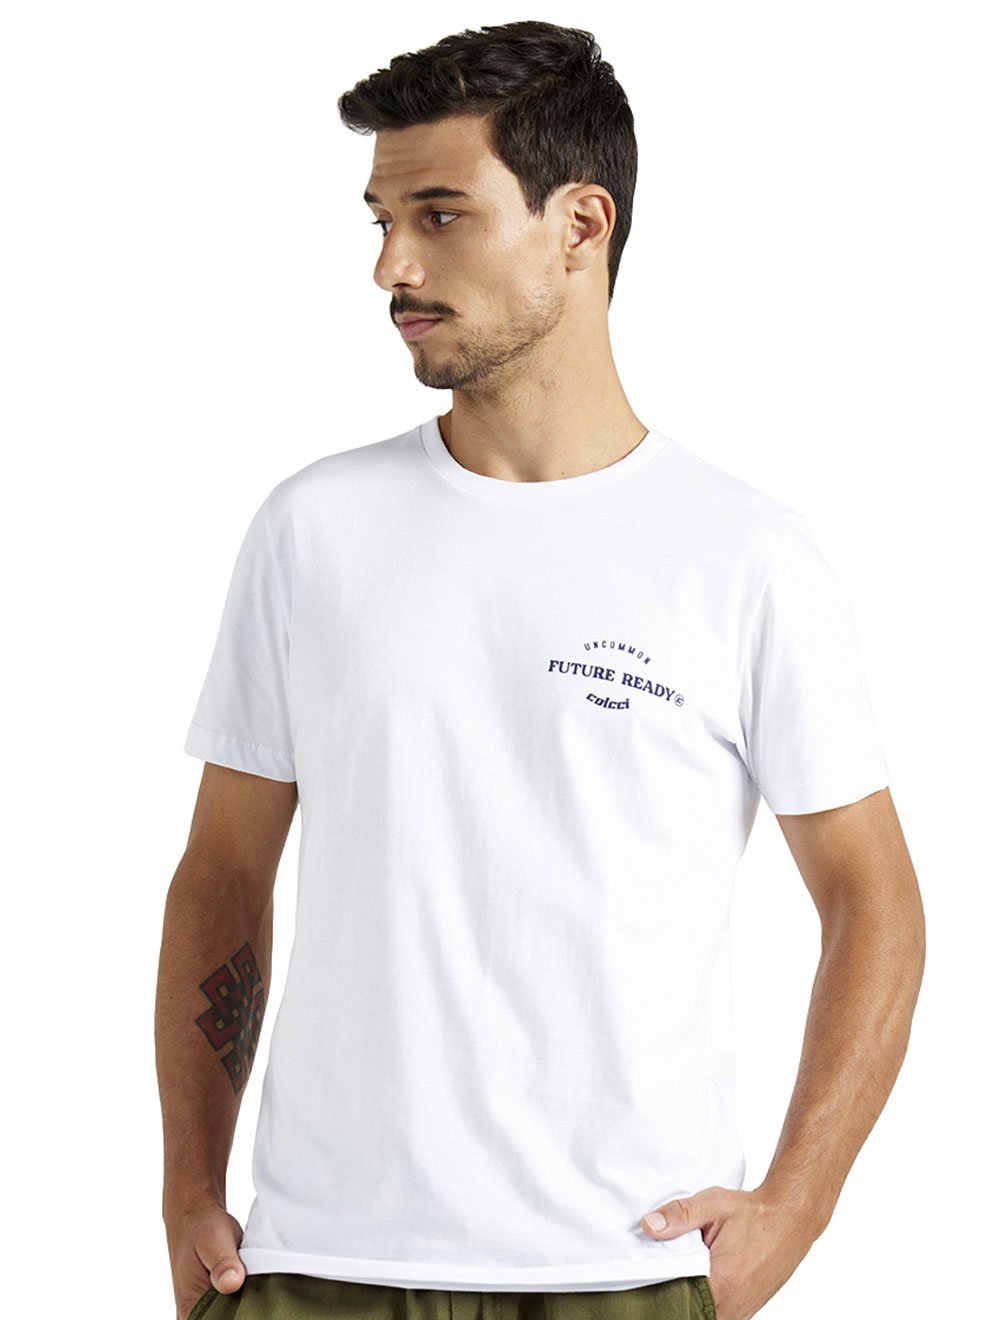 Camiseta Colcci Masculina Slim Future Ready Branca